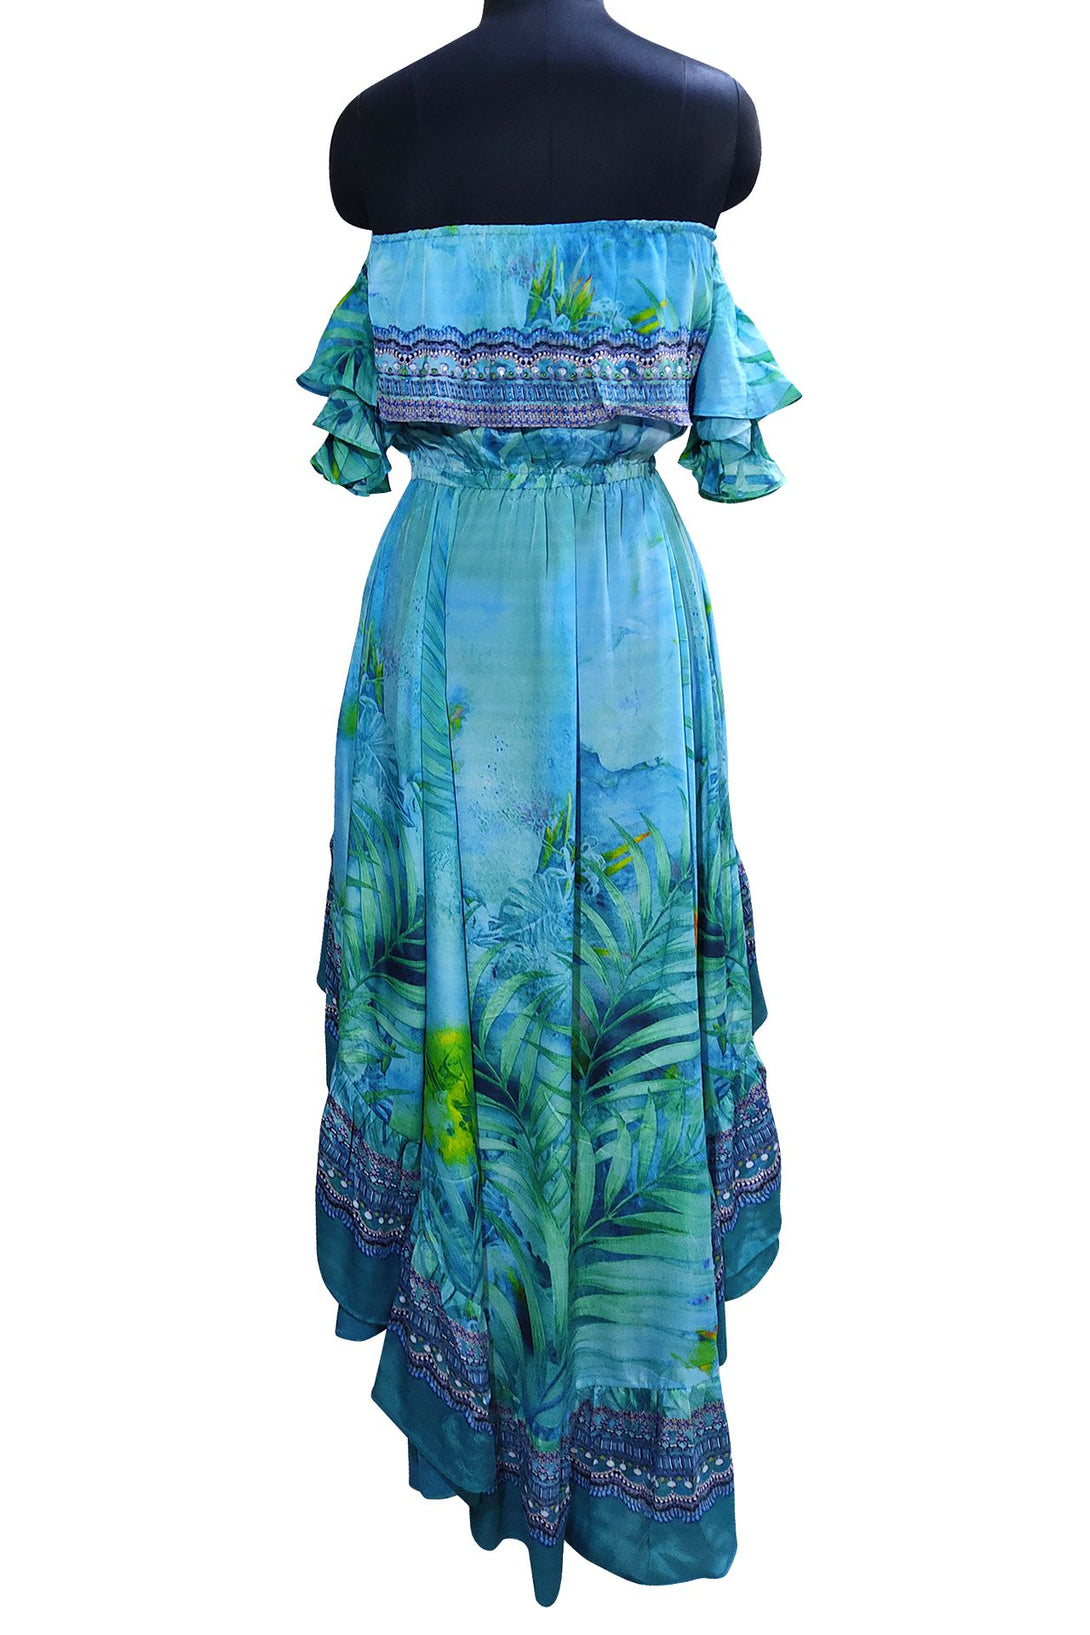  blue maxi dress, high low formal dresses, Shahida Parides, long flowy dresses, plus size maxi dresses,